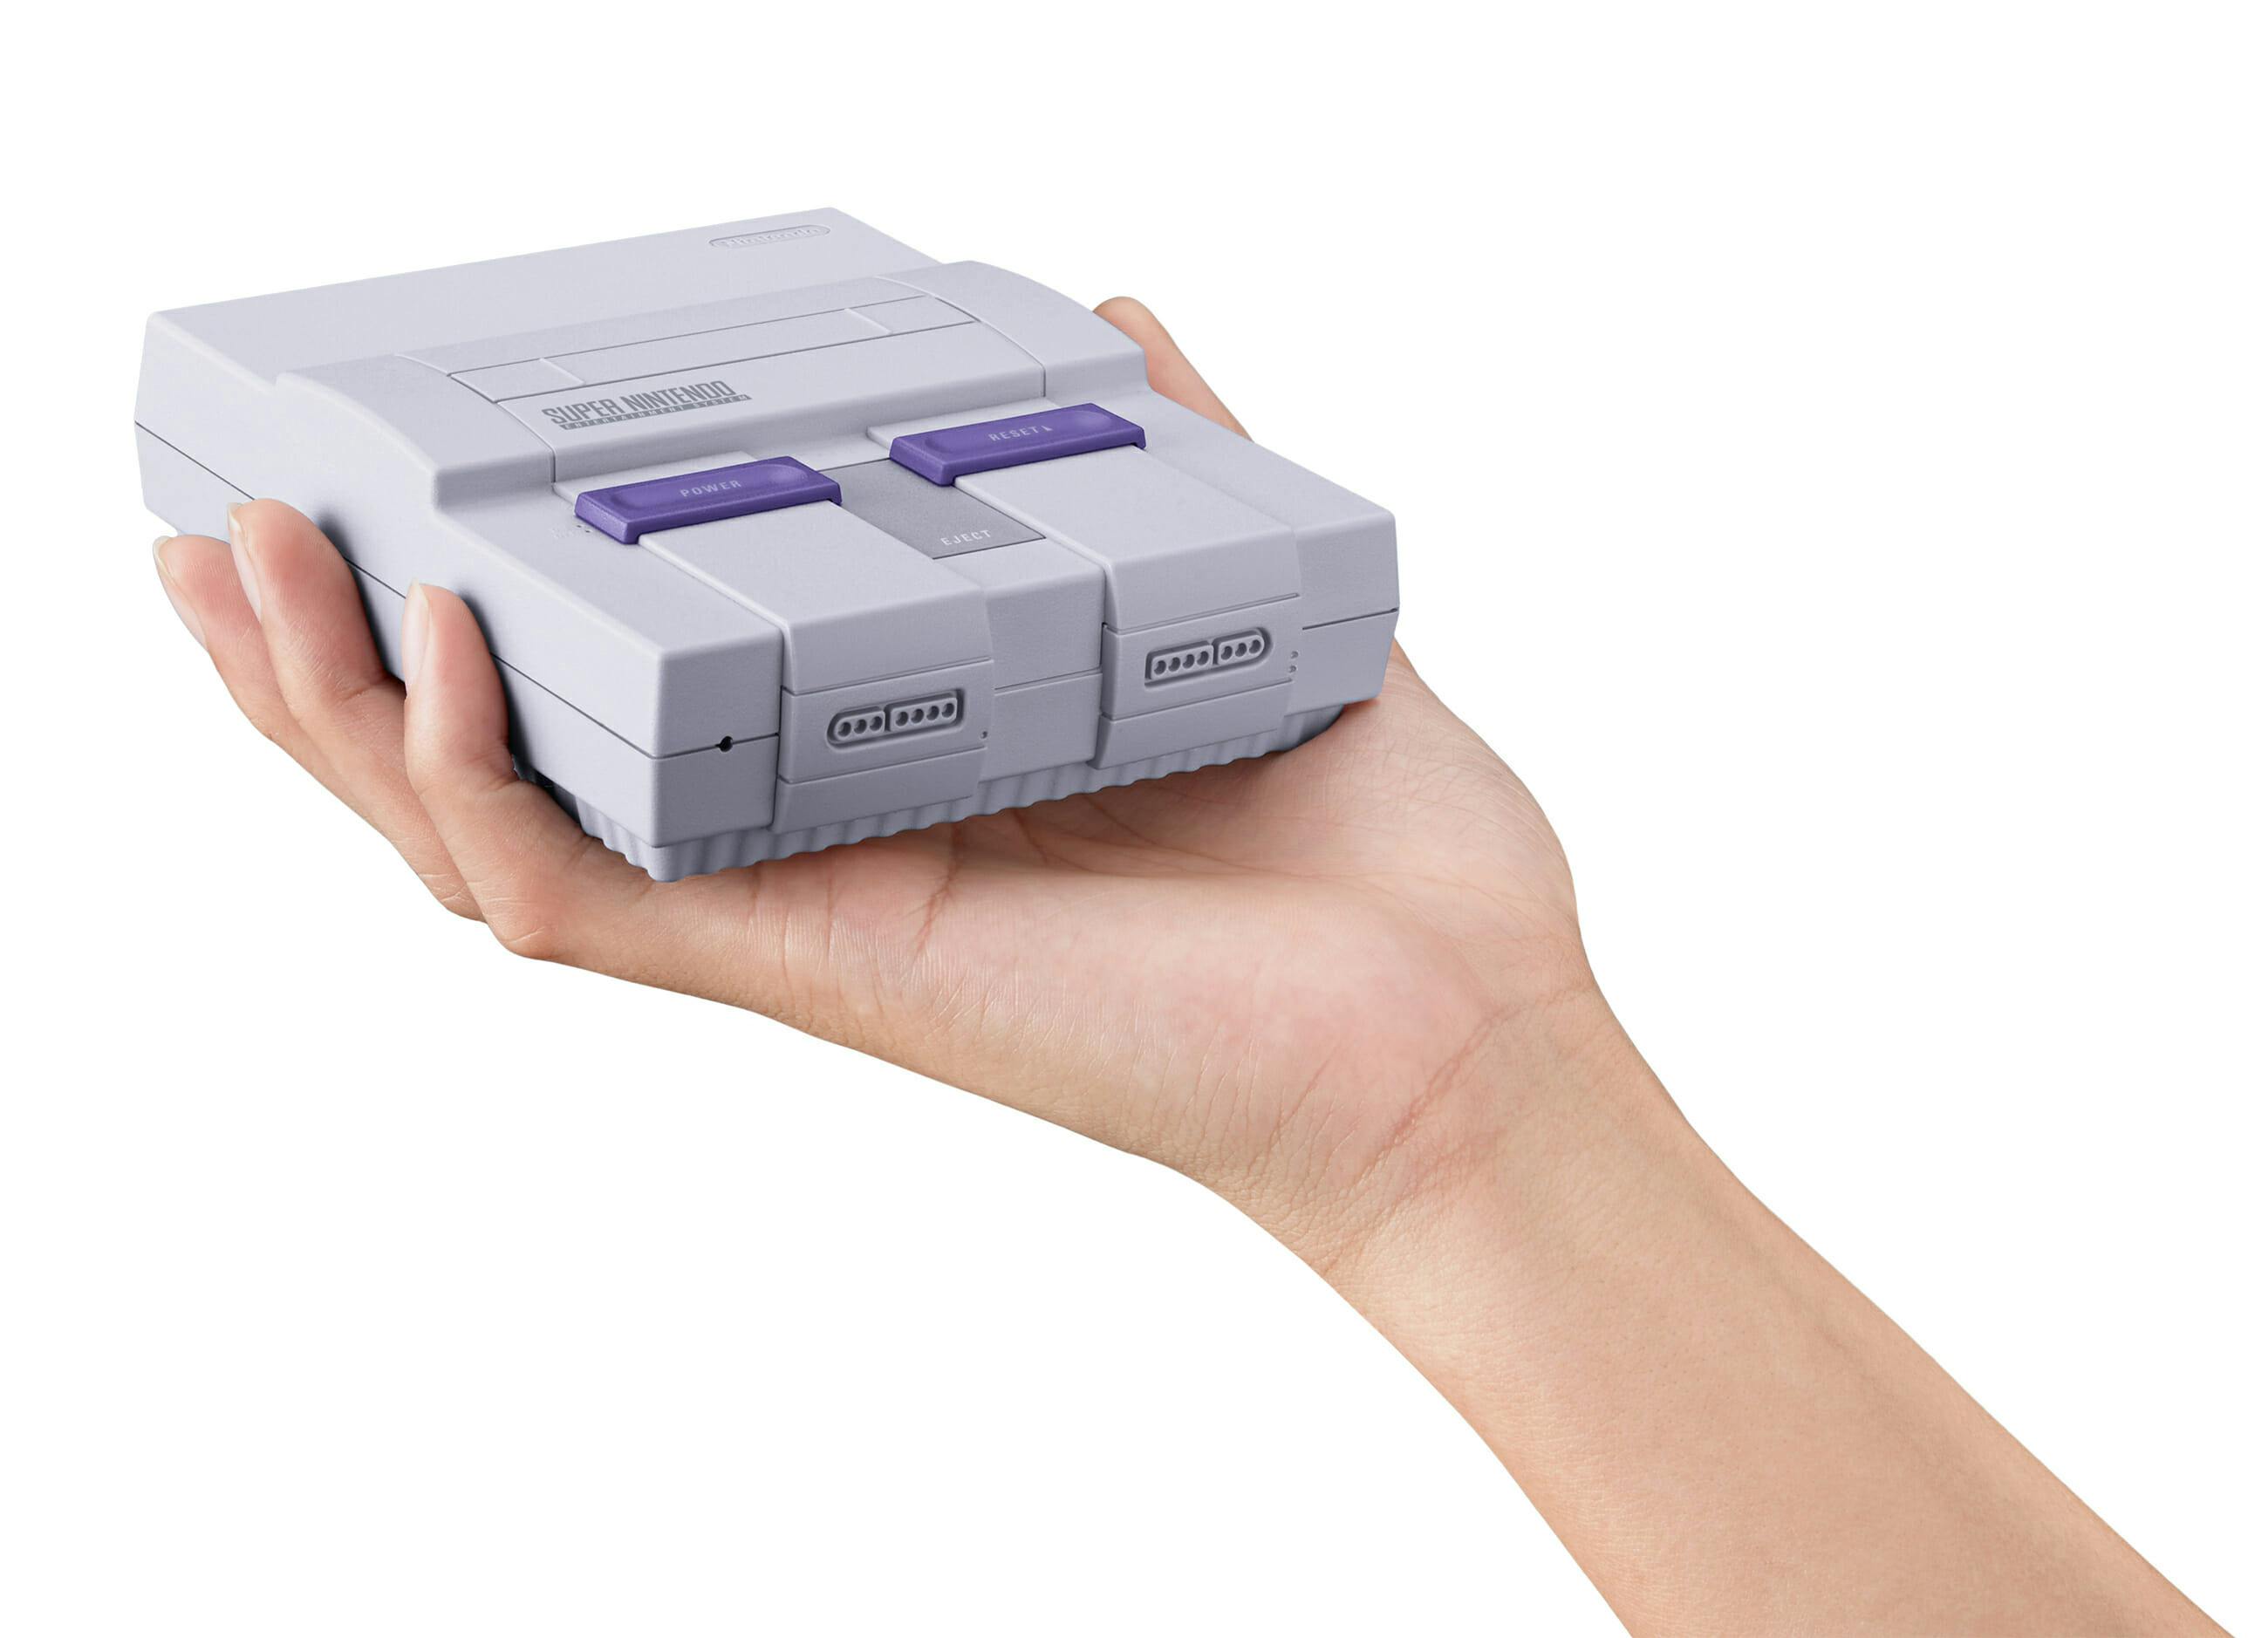 snes mini : Super Nintendo Entertainment System